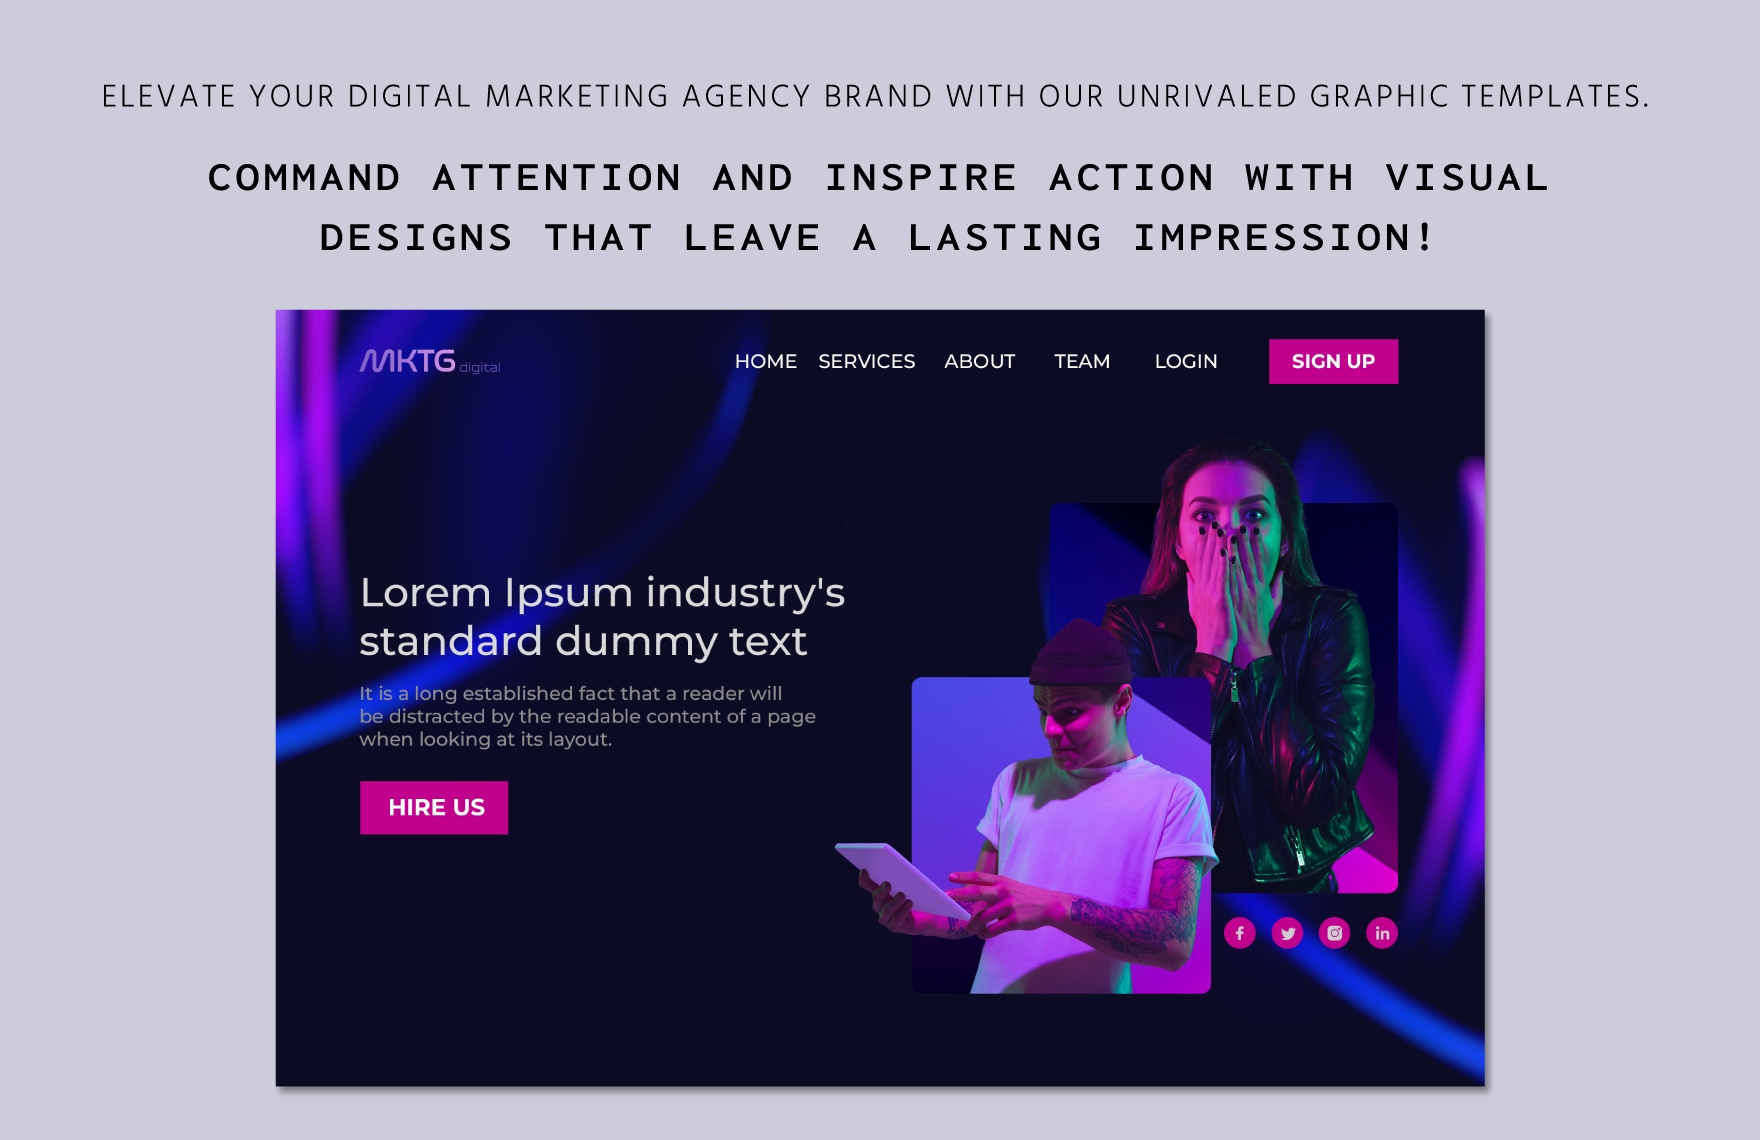 Digital Marketing Agency Website Header Design Template